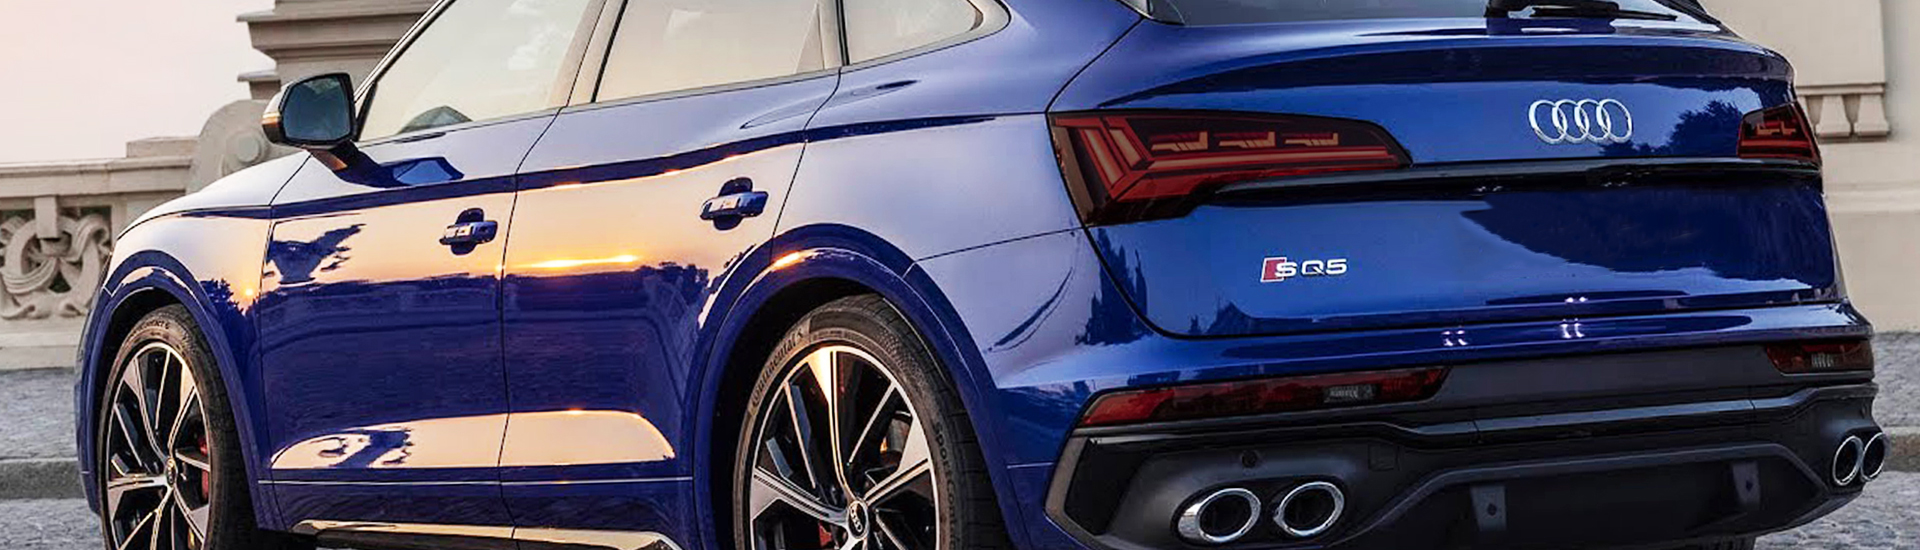 Audi SQ5 Tail Light Tint Covers